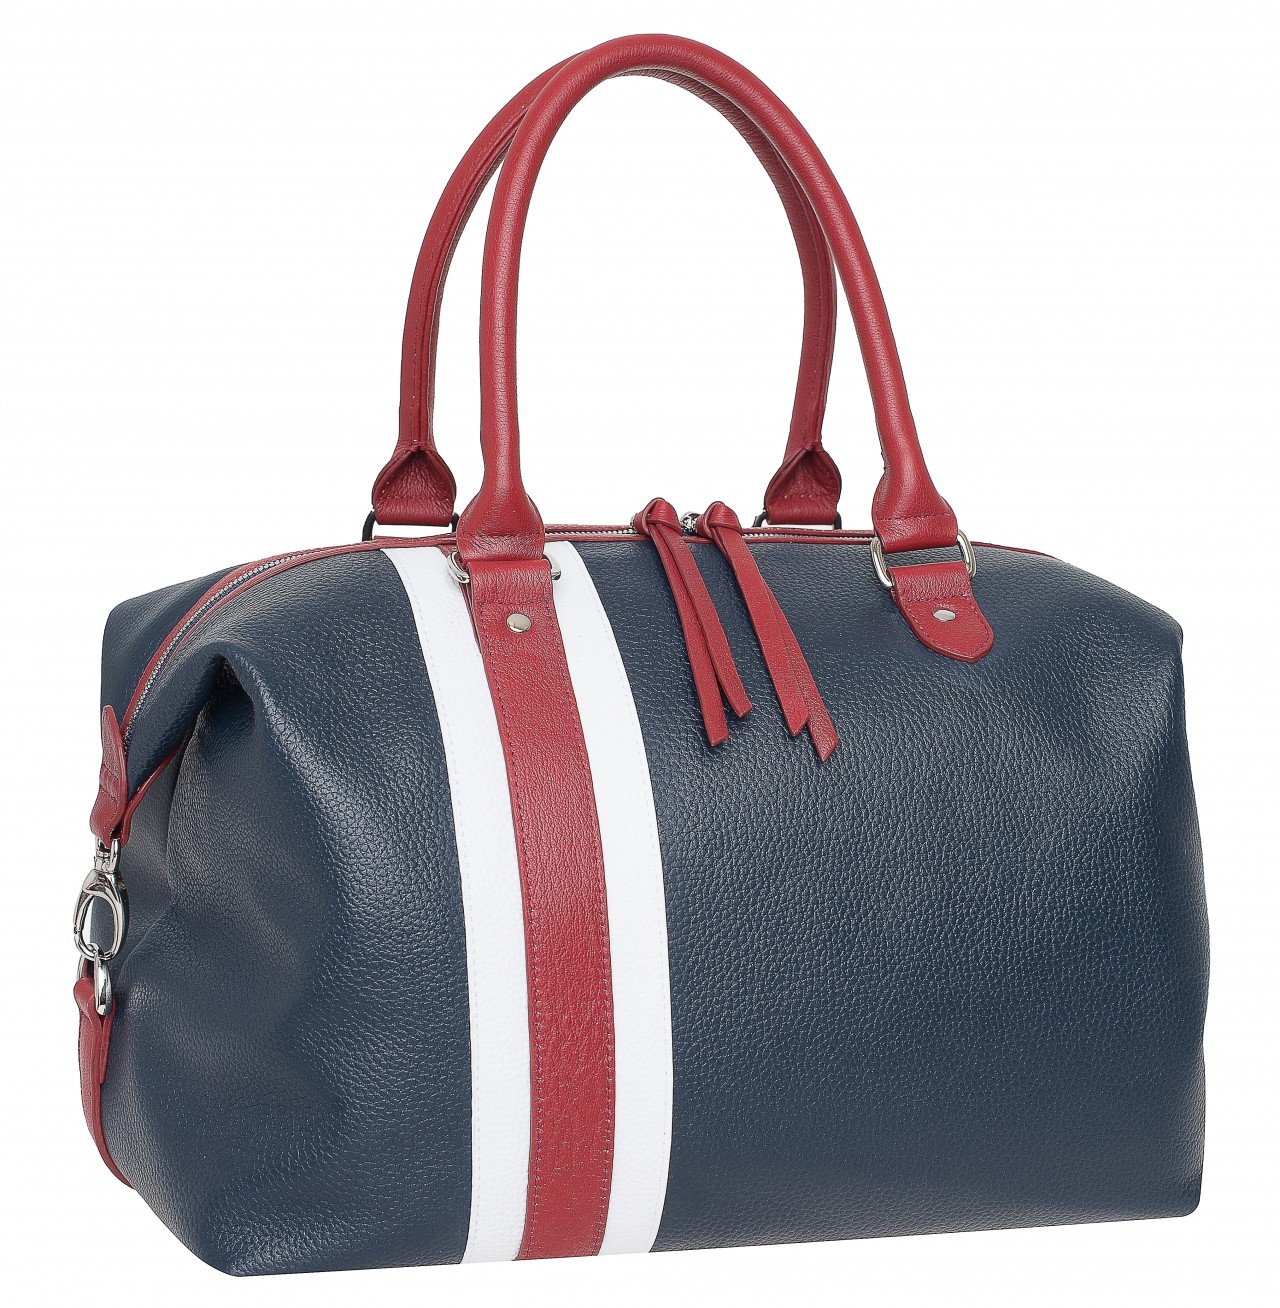 Дорожная сумка унисекс Franchesco Mariscotti 6-431, океан-гранат-белый, 42x28x24 см